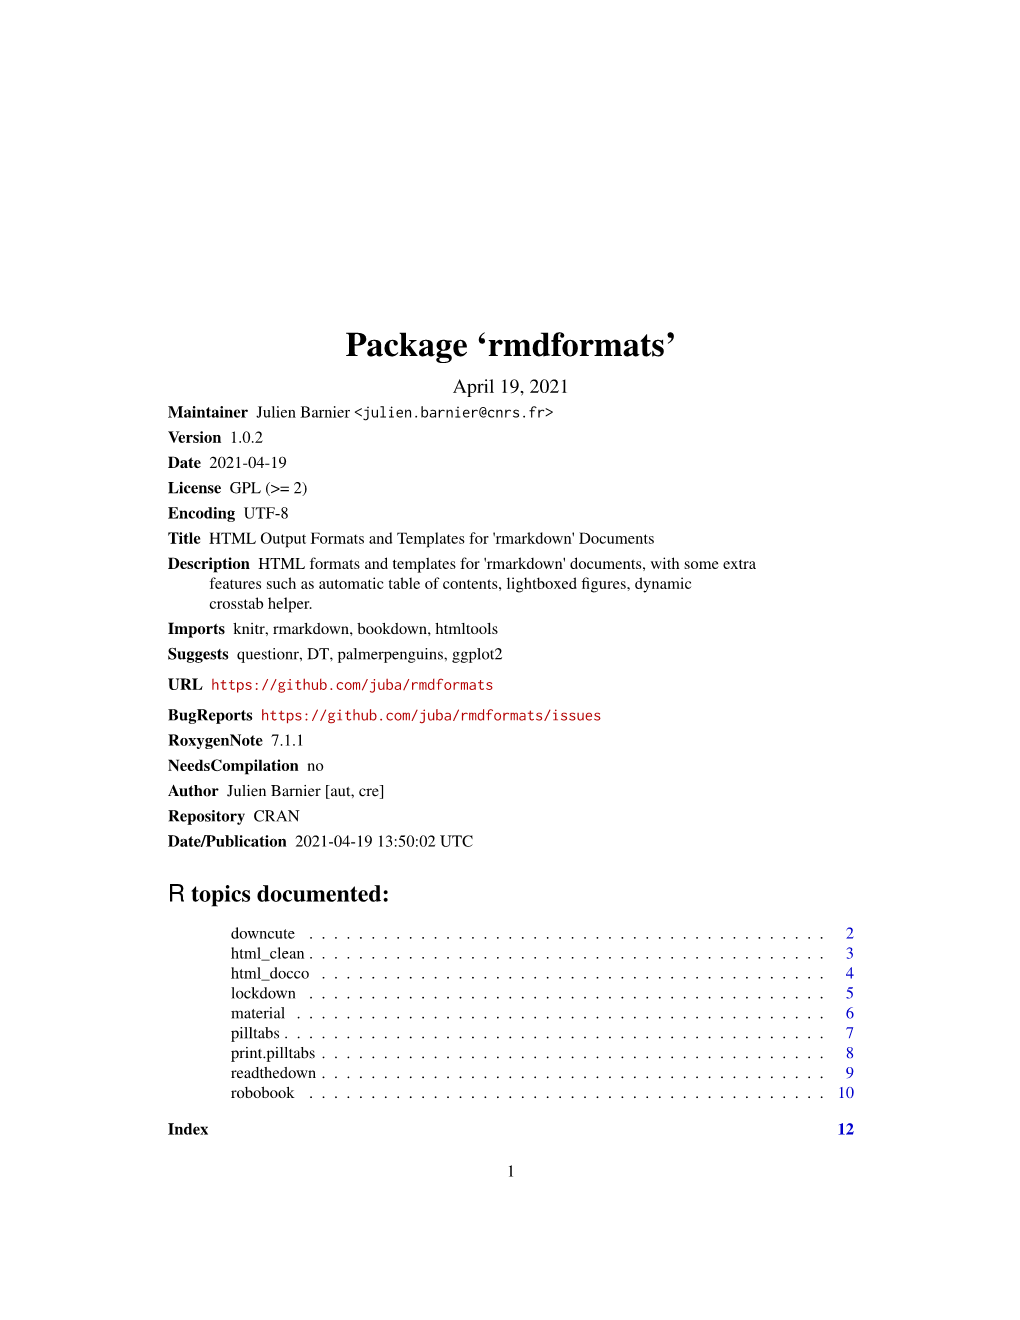 Package 'Rmdformats'